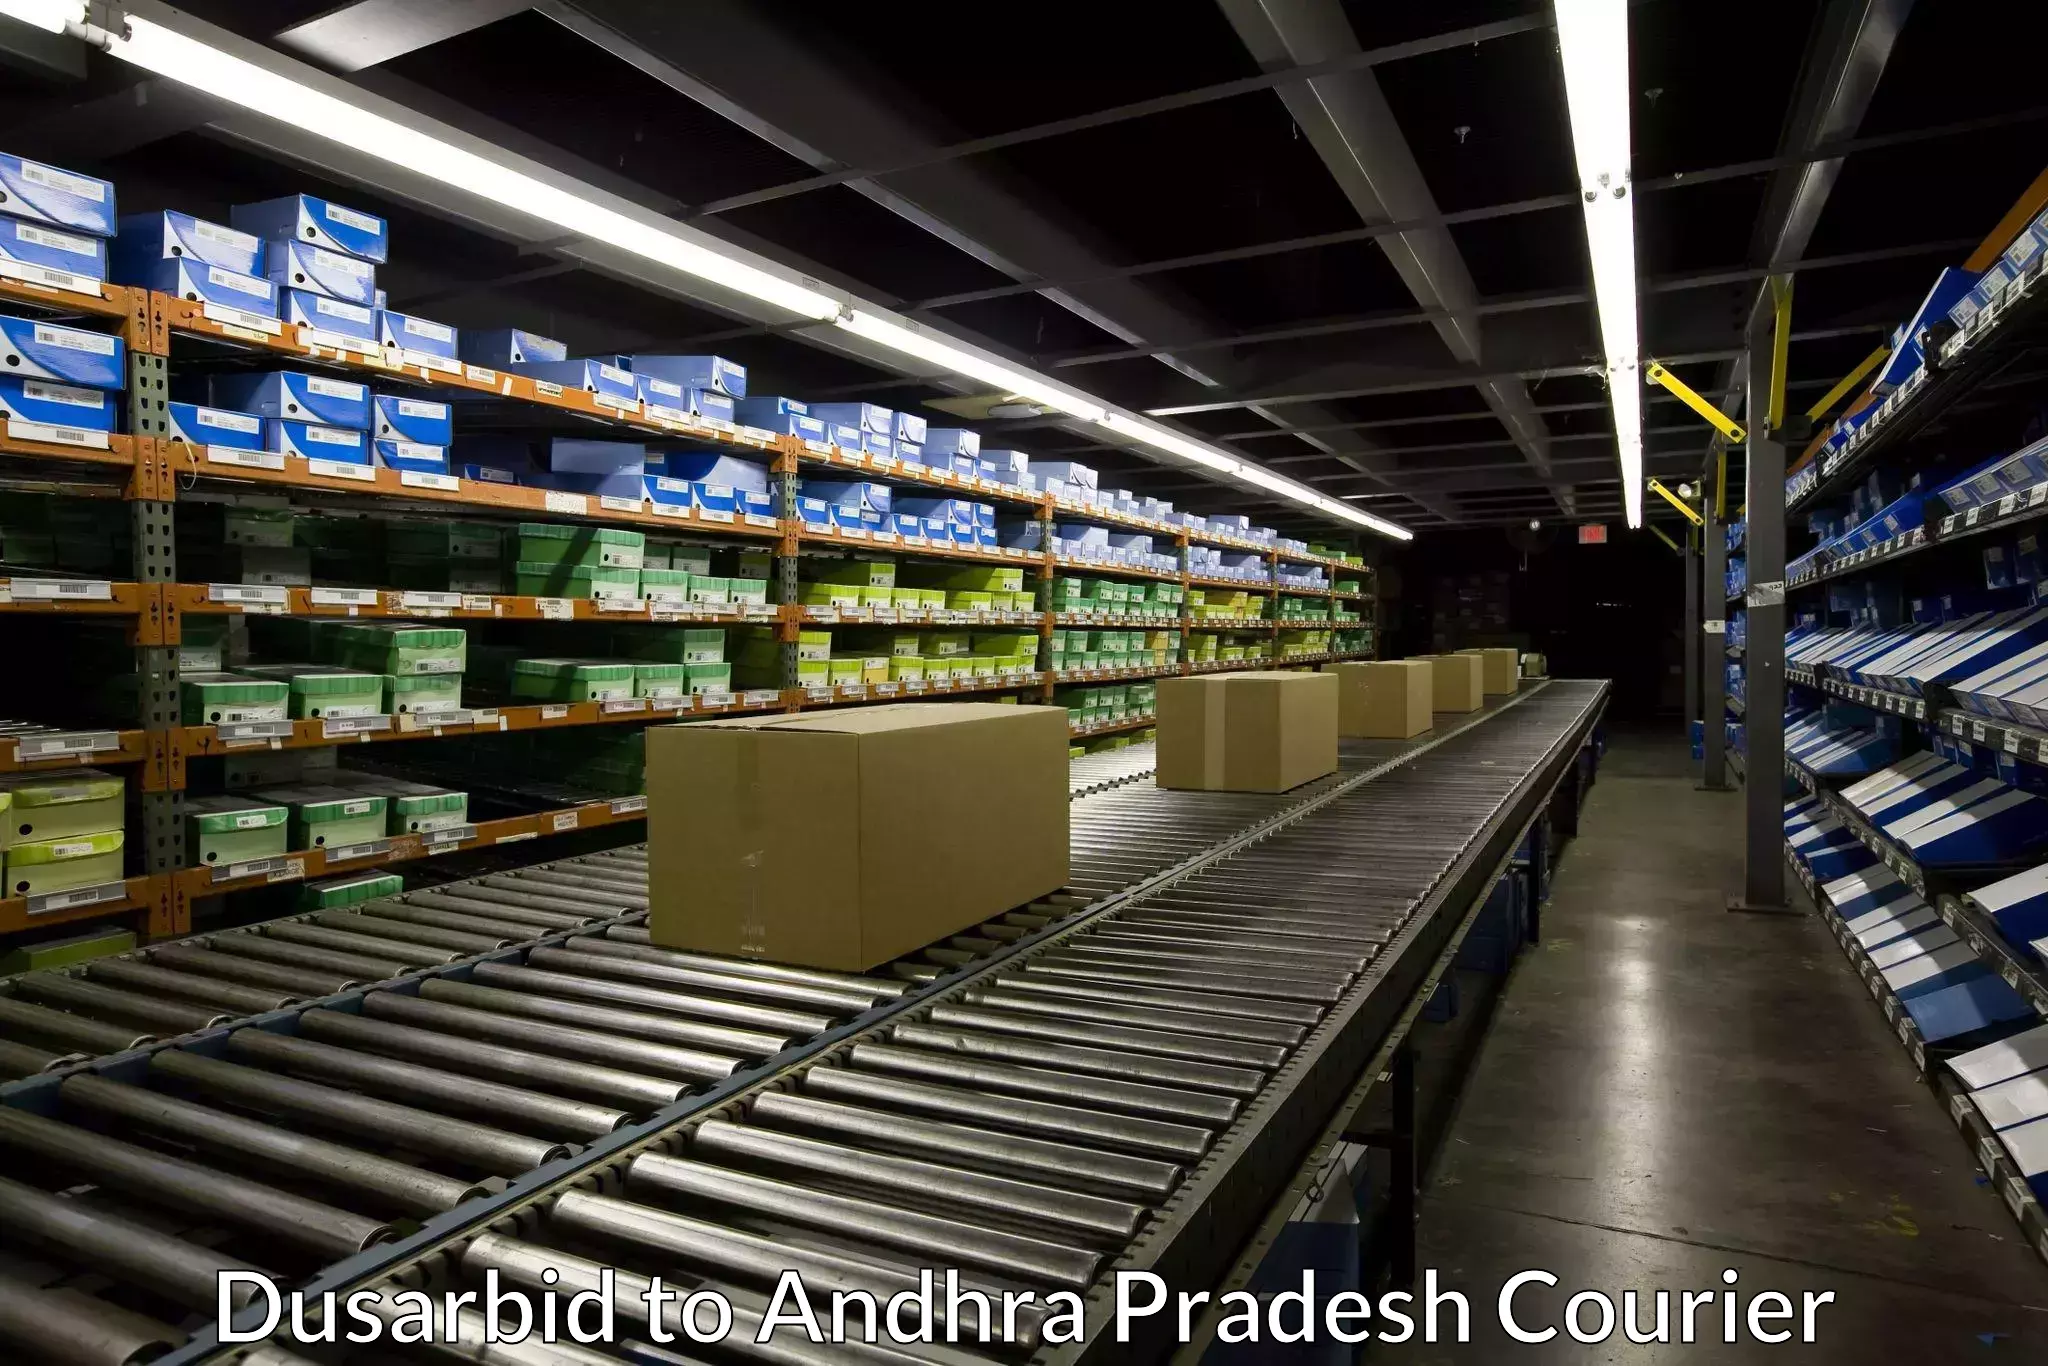 On-demand delivery Dusarbid to Andhra Pradesh